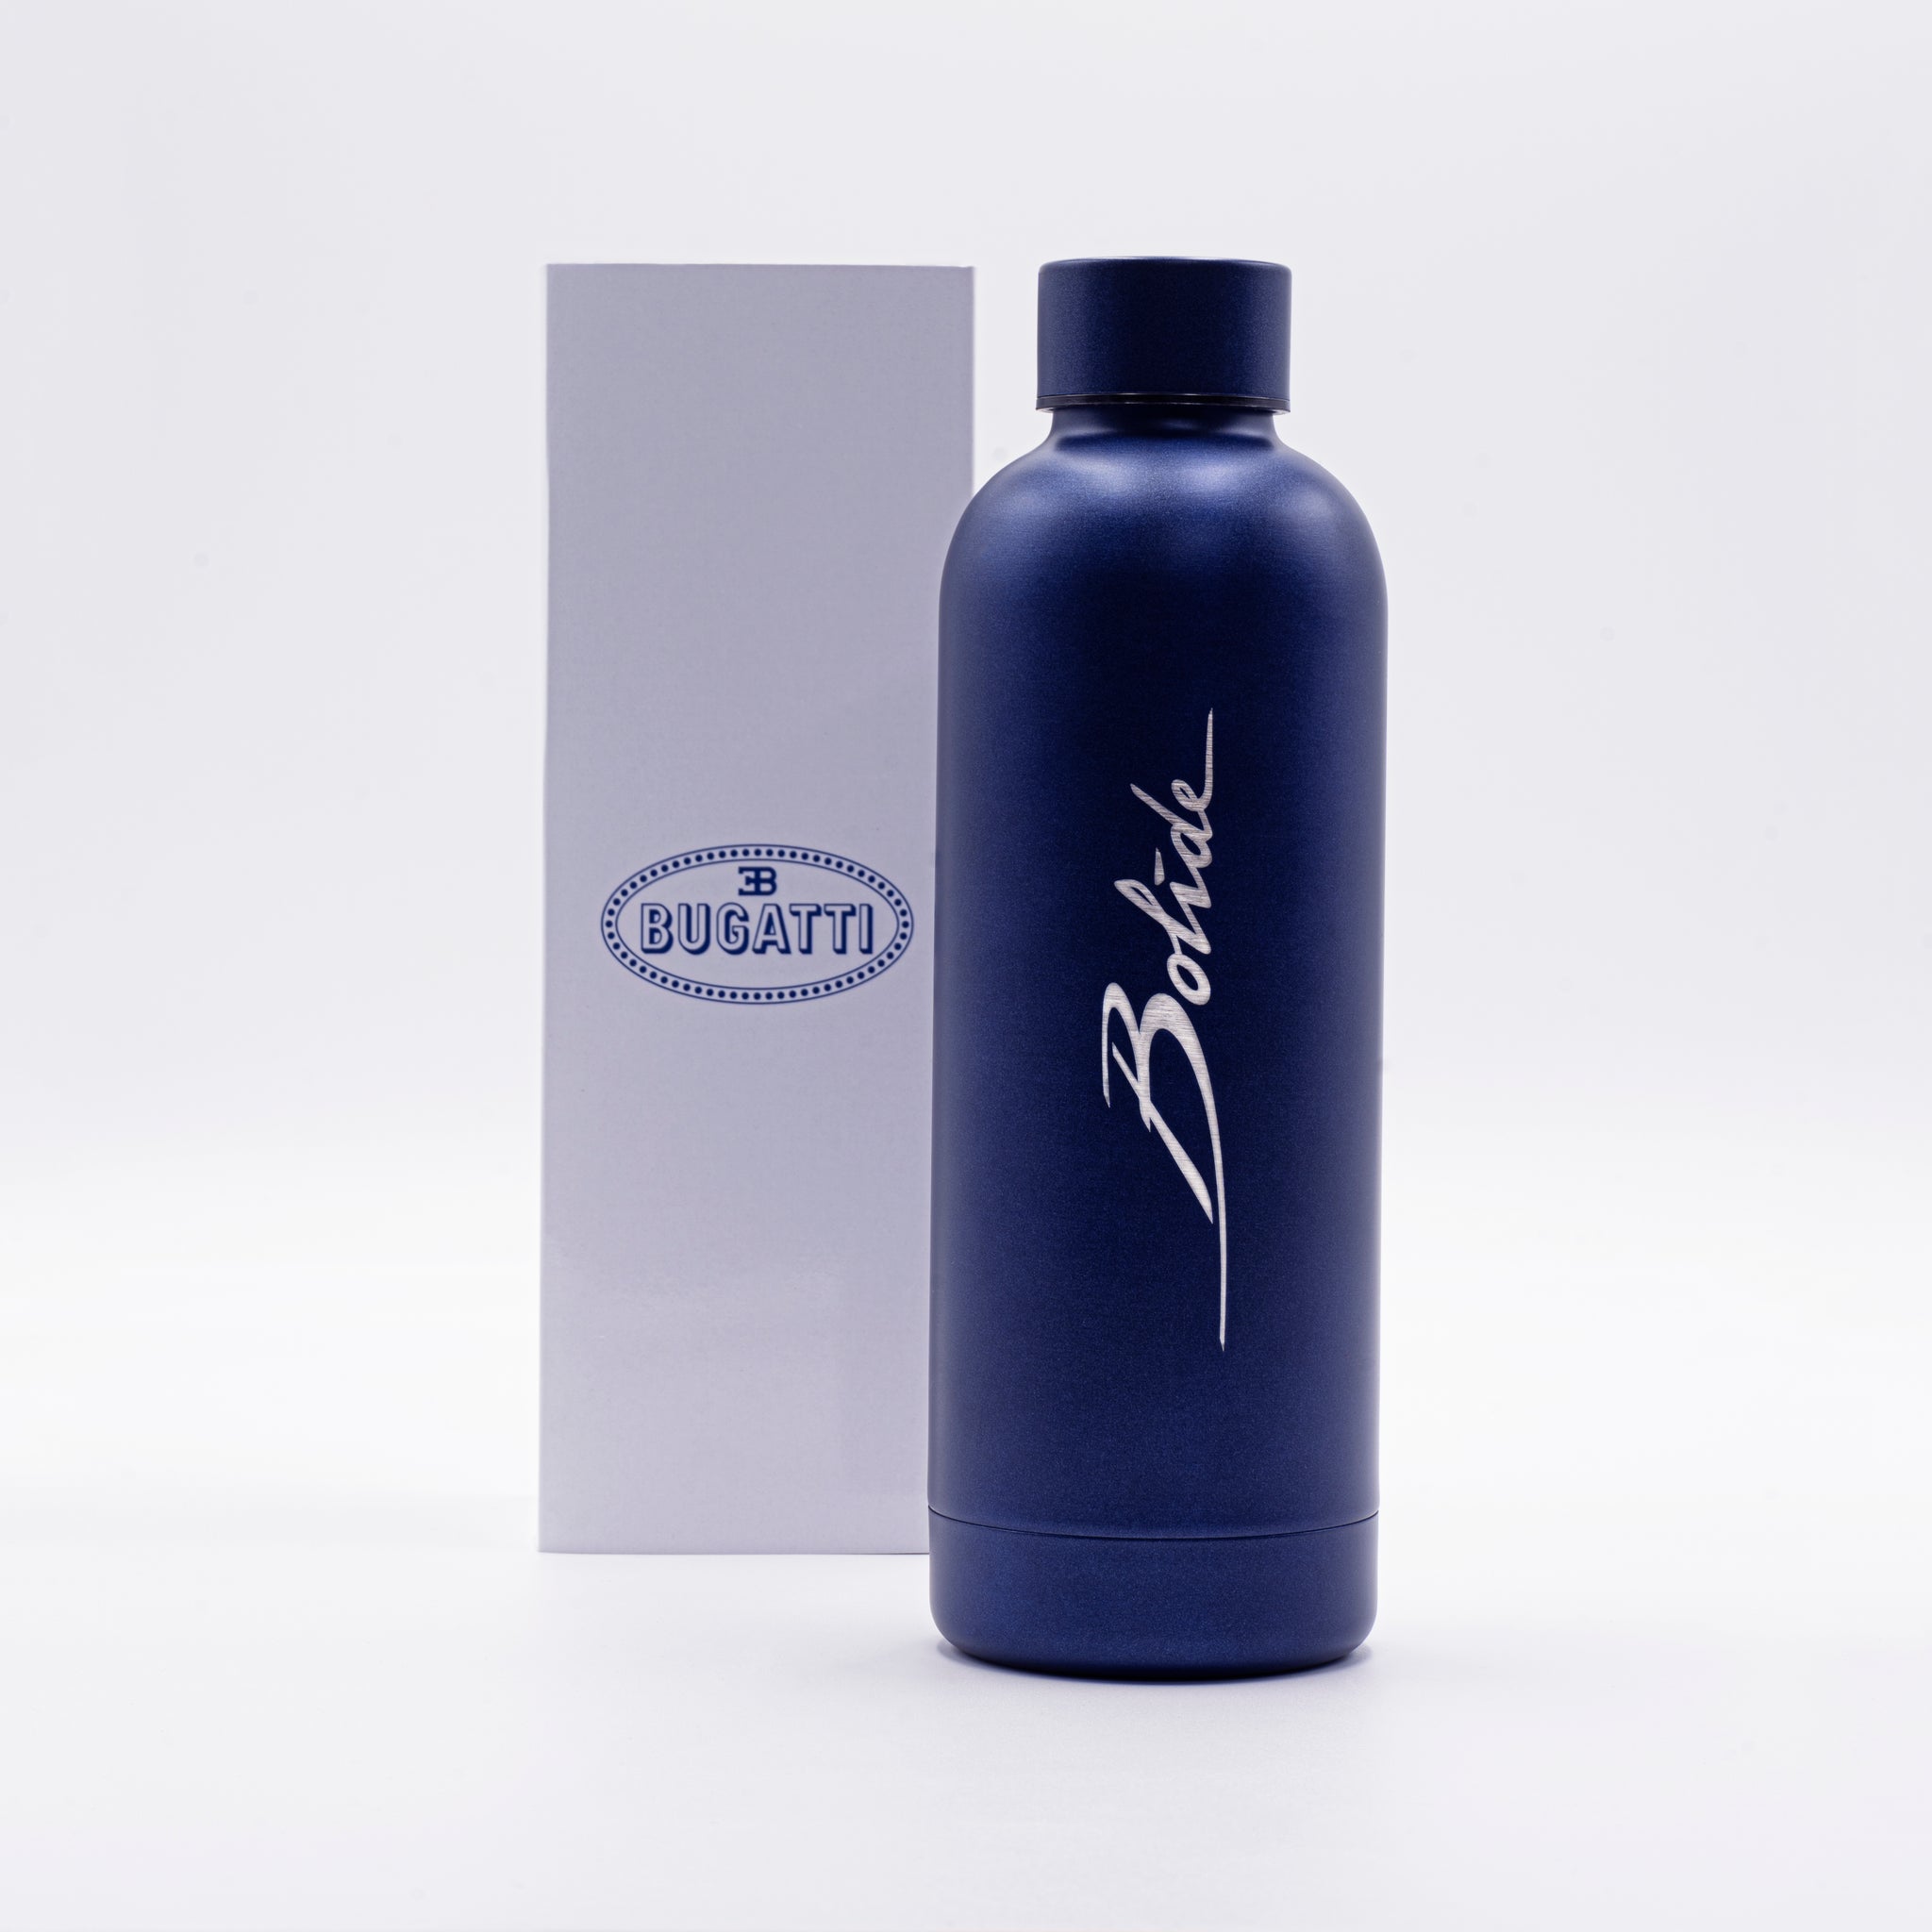 Water bottle blue | Bugatti Bolide – Bugatti Merchandising Official Store